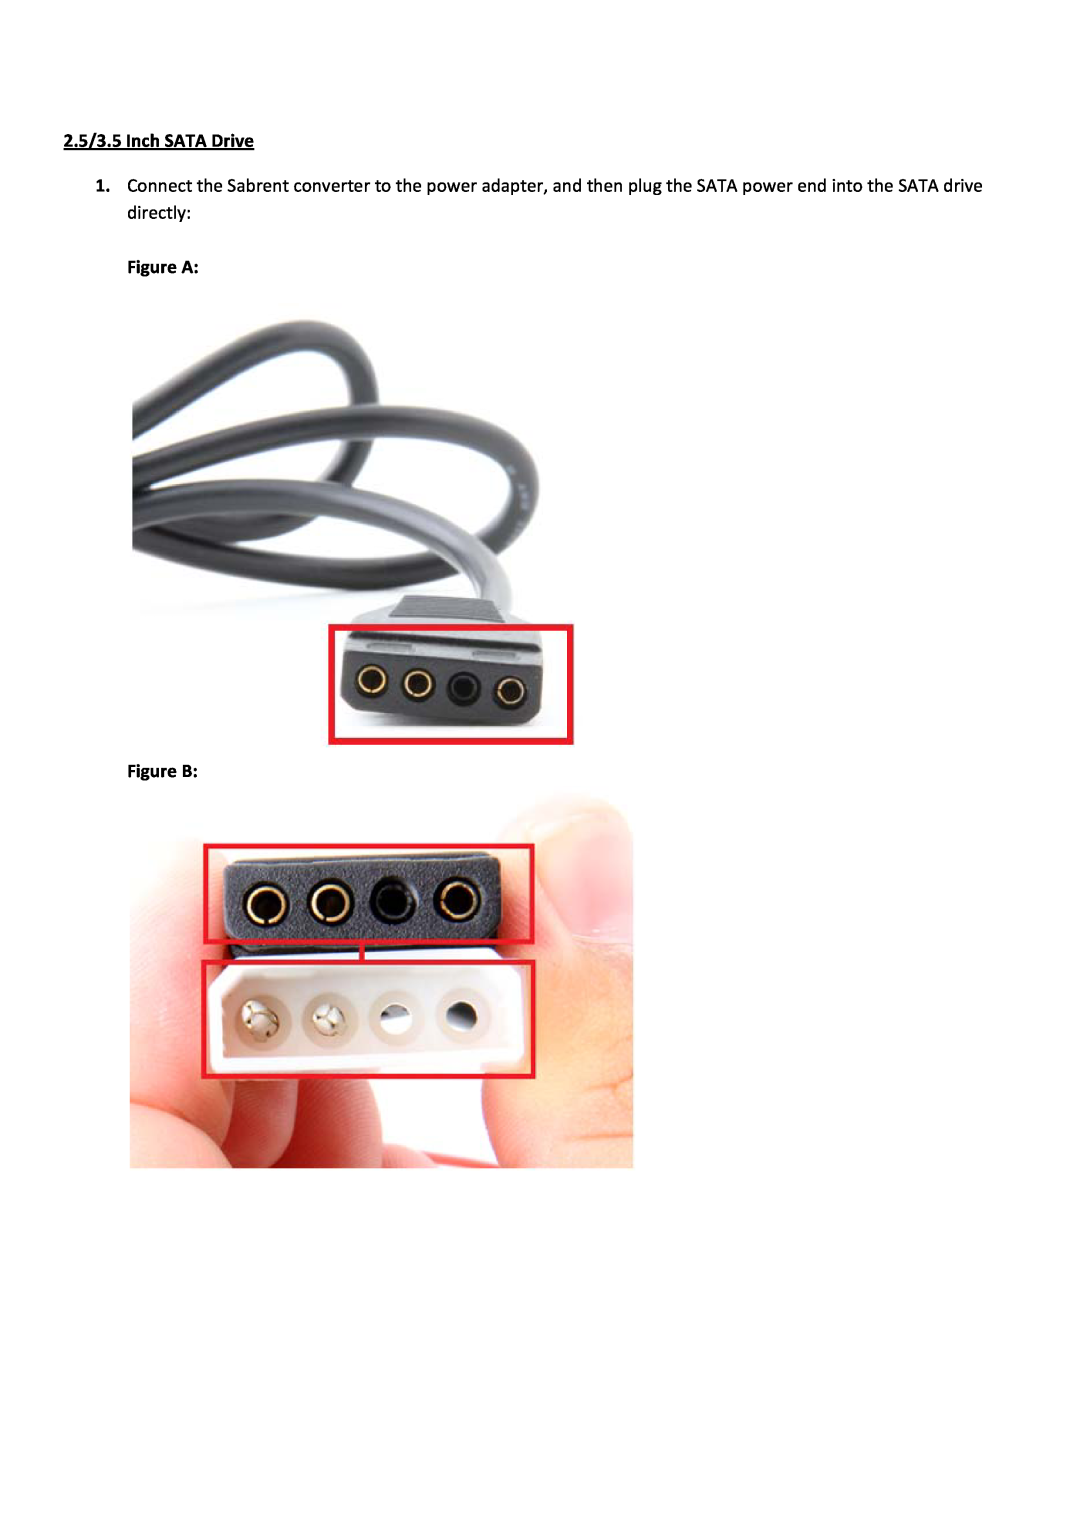 Sabrent USBDSC5 manual 2.5/3.5 Inch SATA Drive, Figure A Figure B 